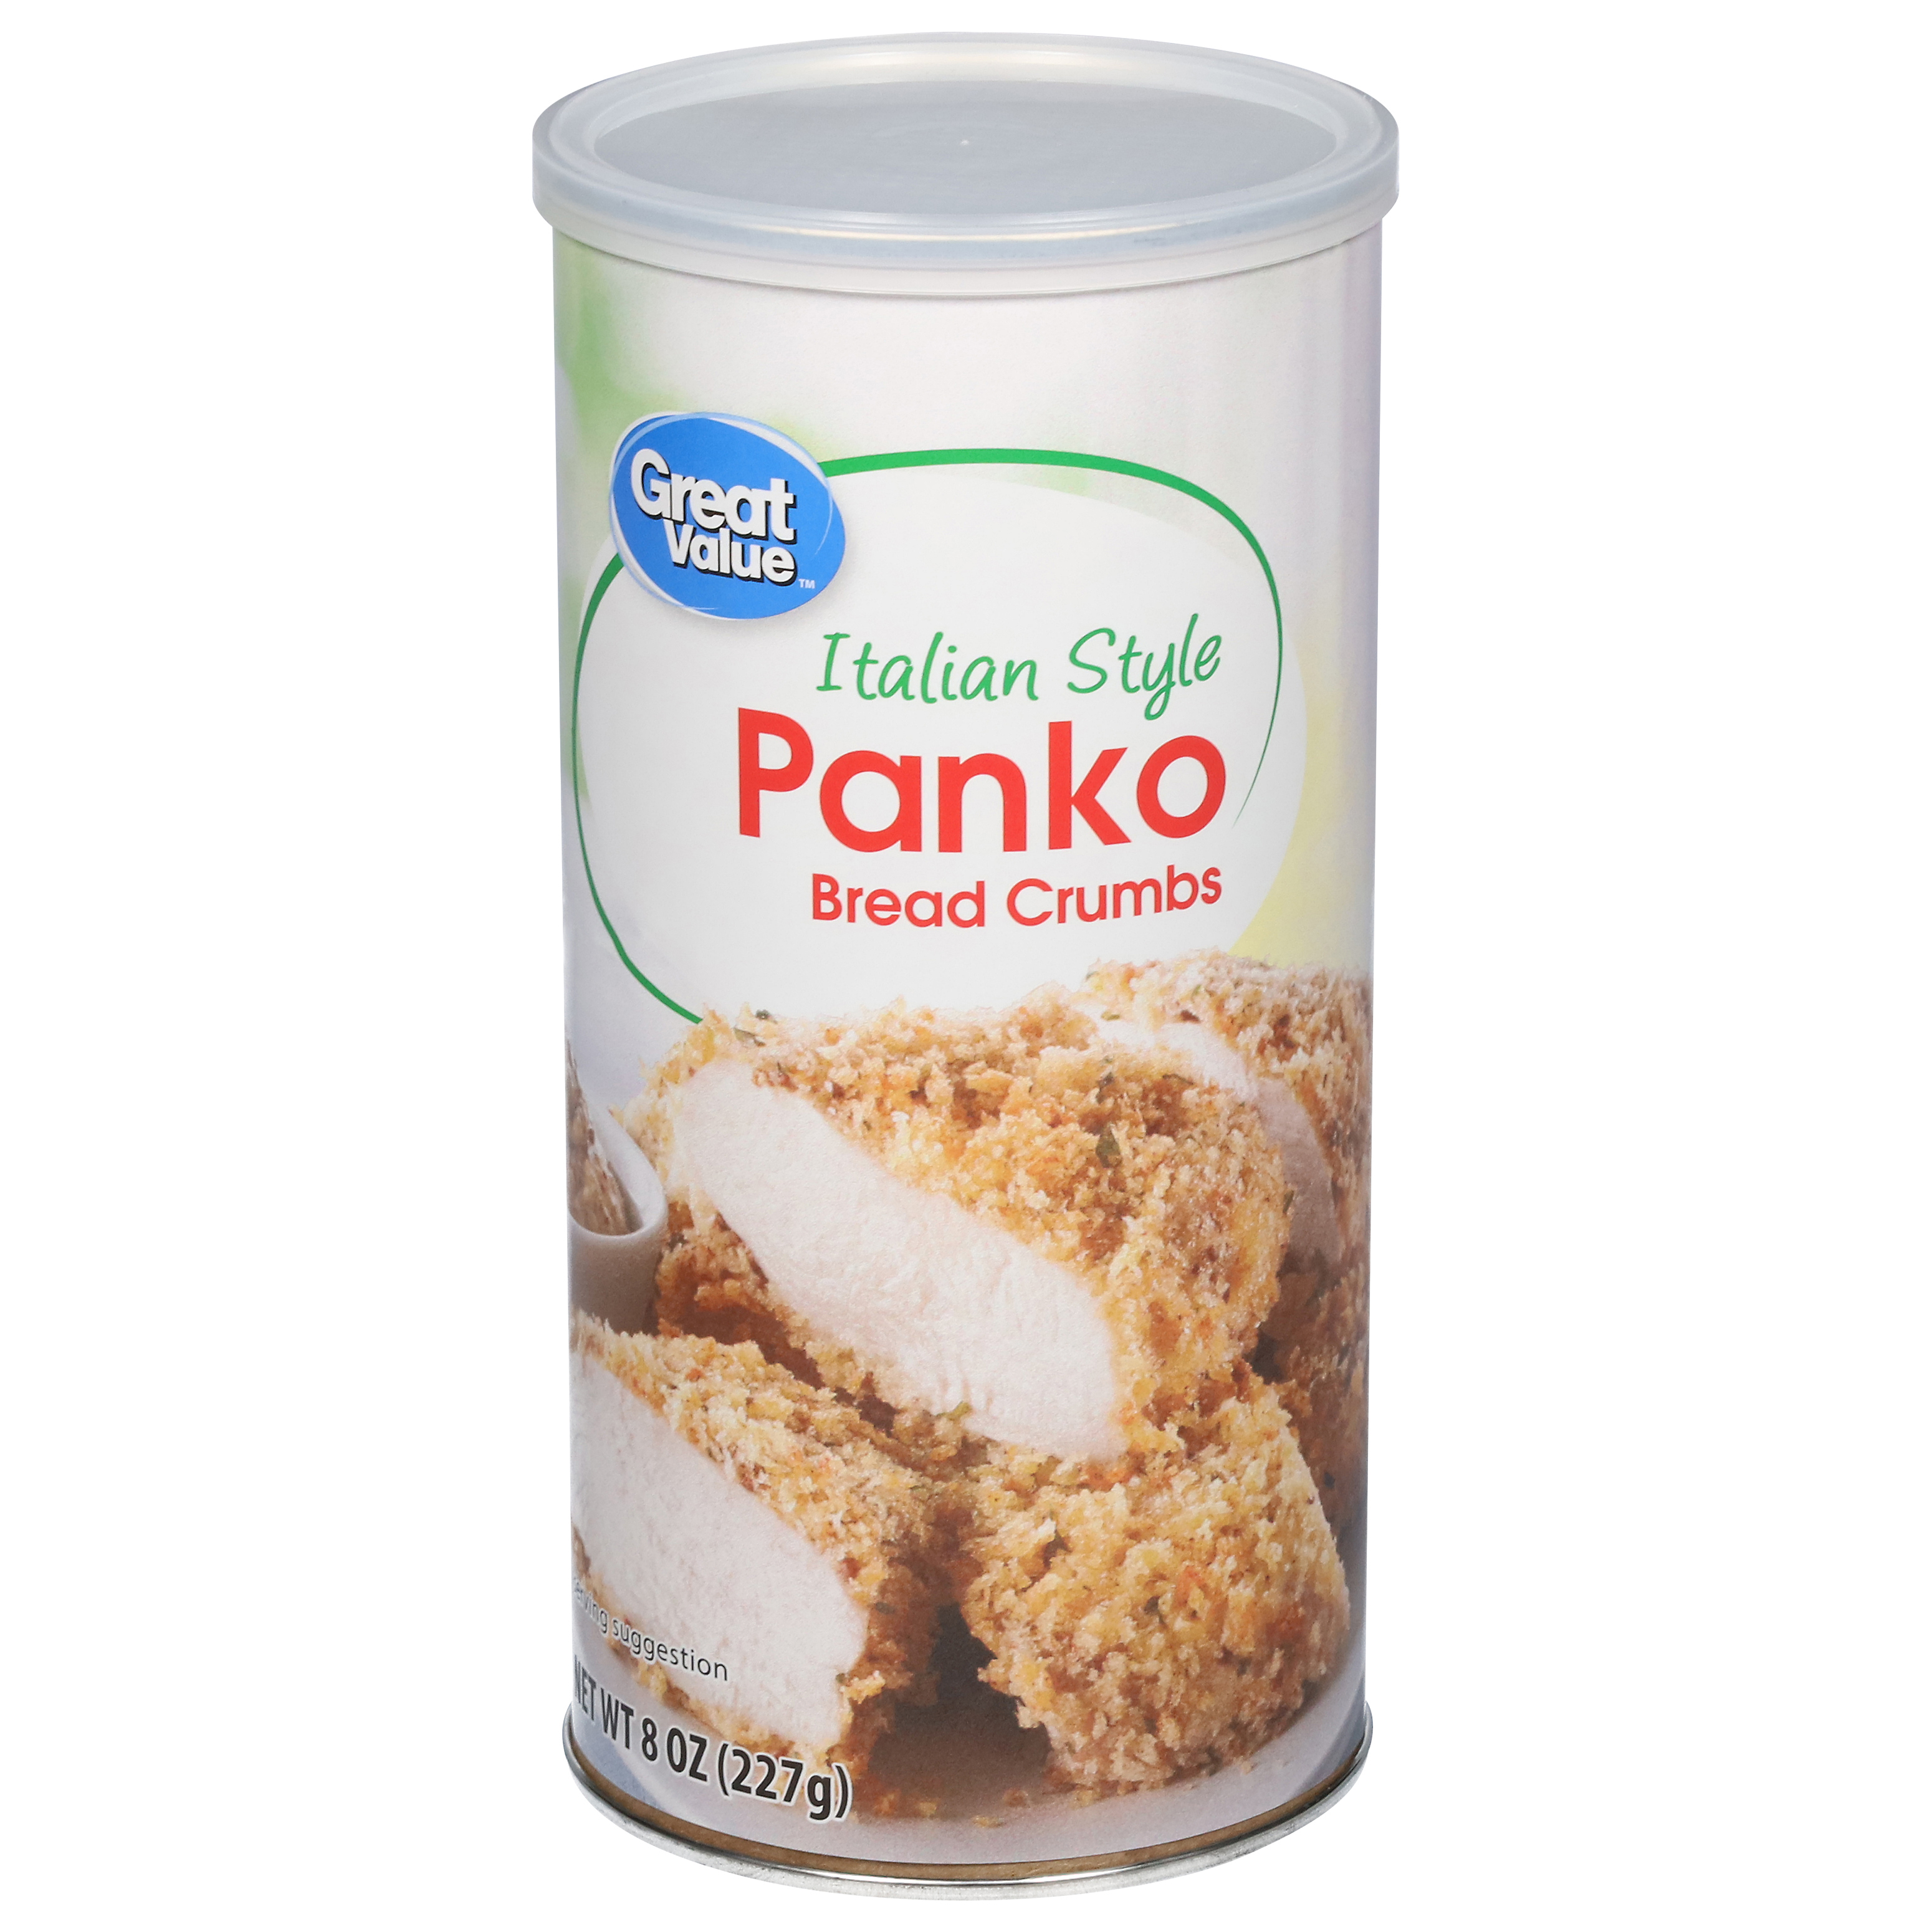 Great Value Italian Style Panko Bread Crumbs, 8 oz - image 4 of 12